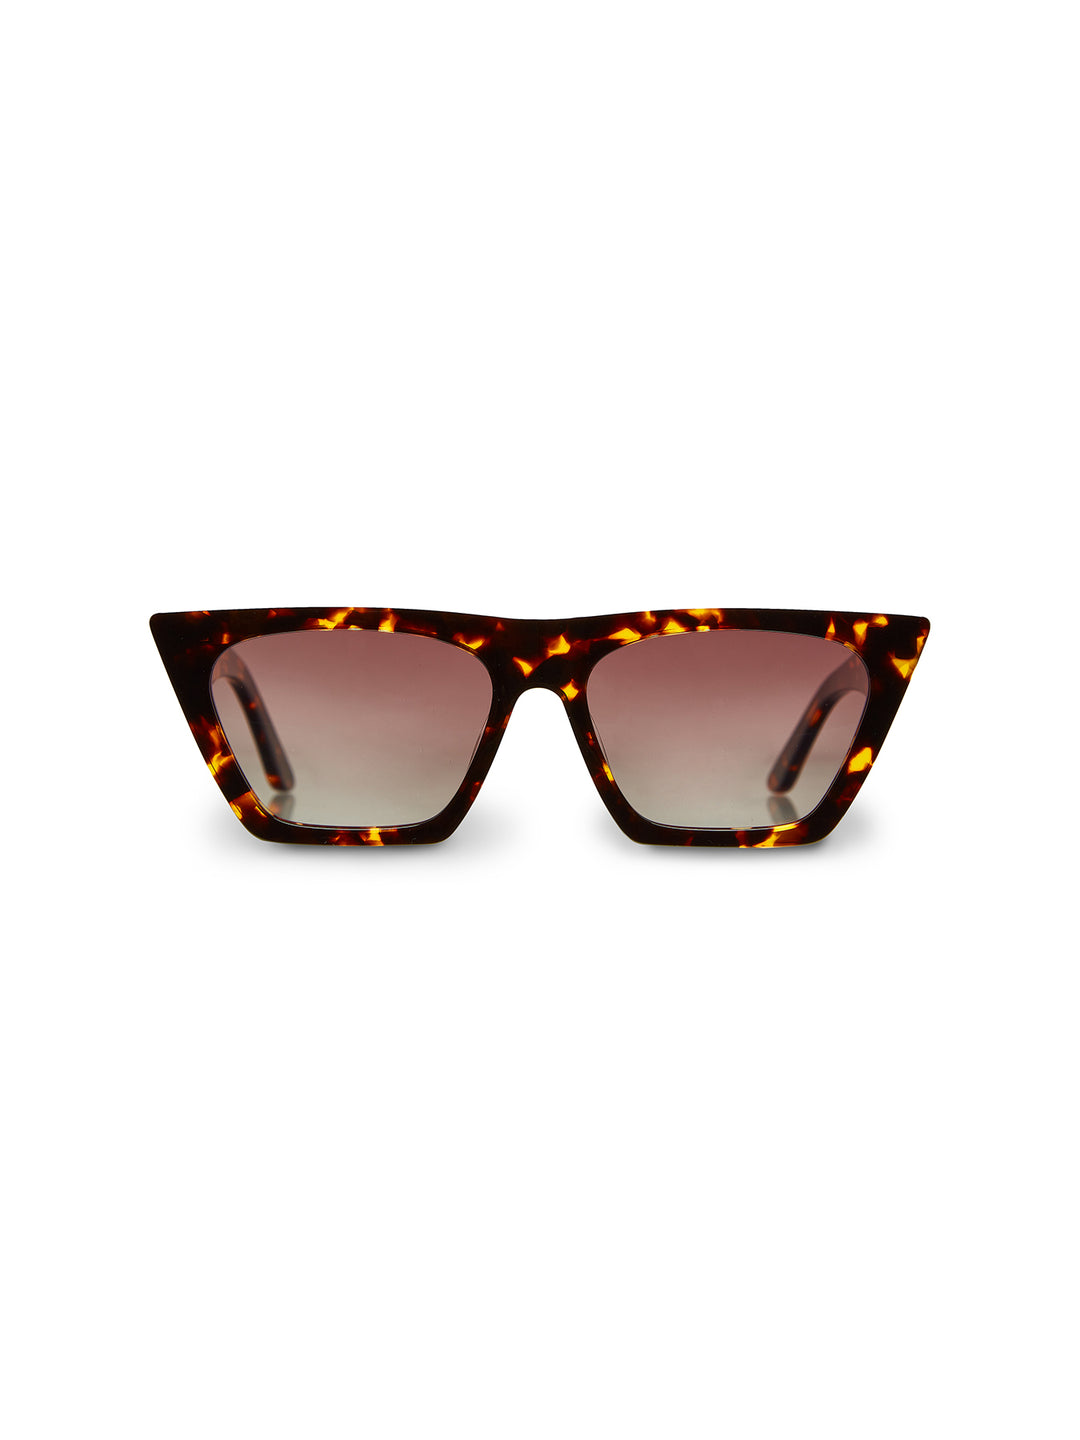 CLASSY - Sonnenbrille • Farbe: Braun Tortoise